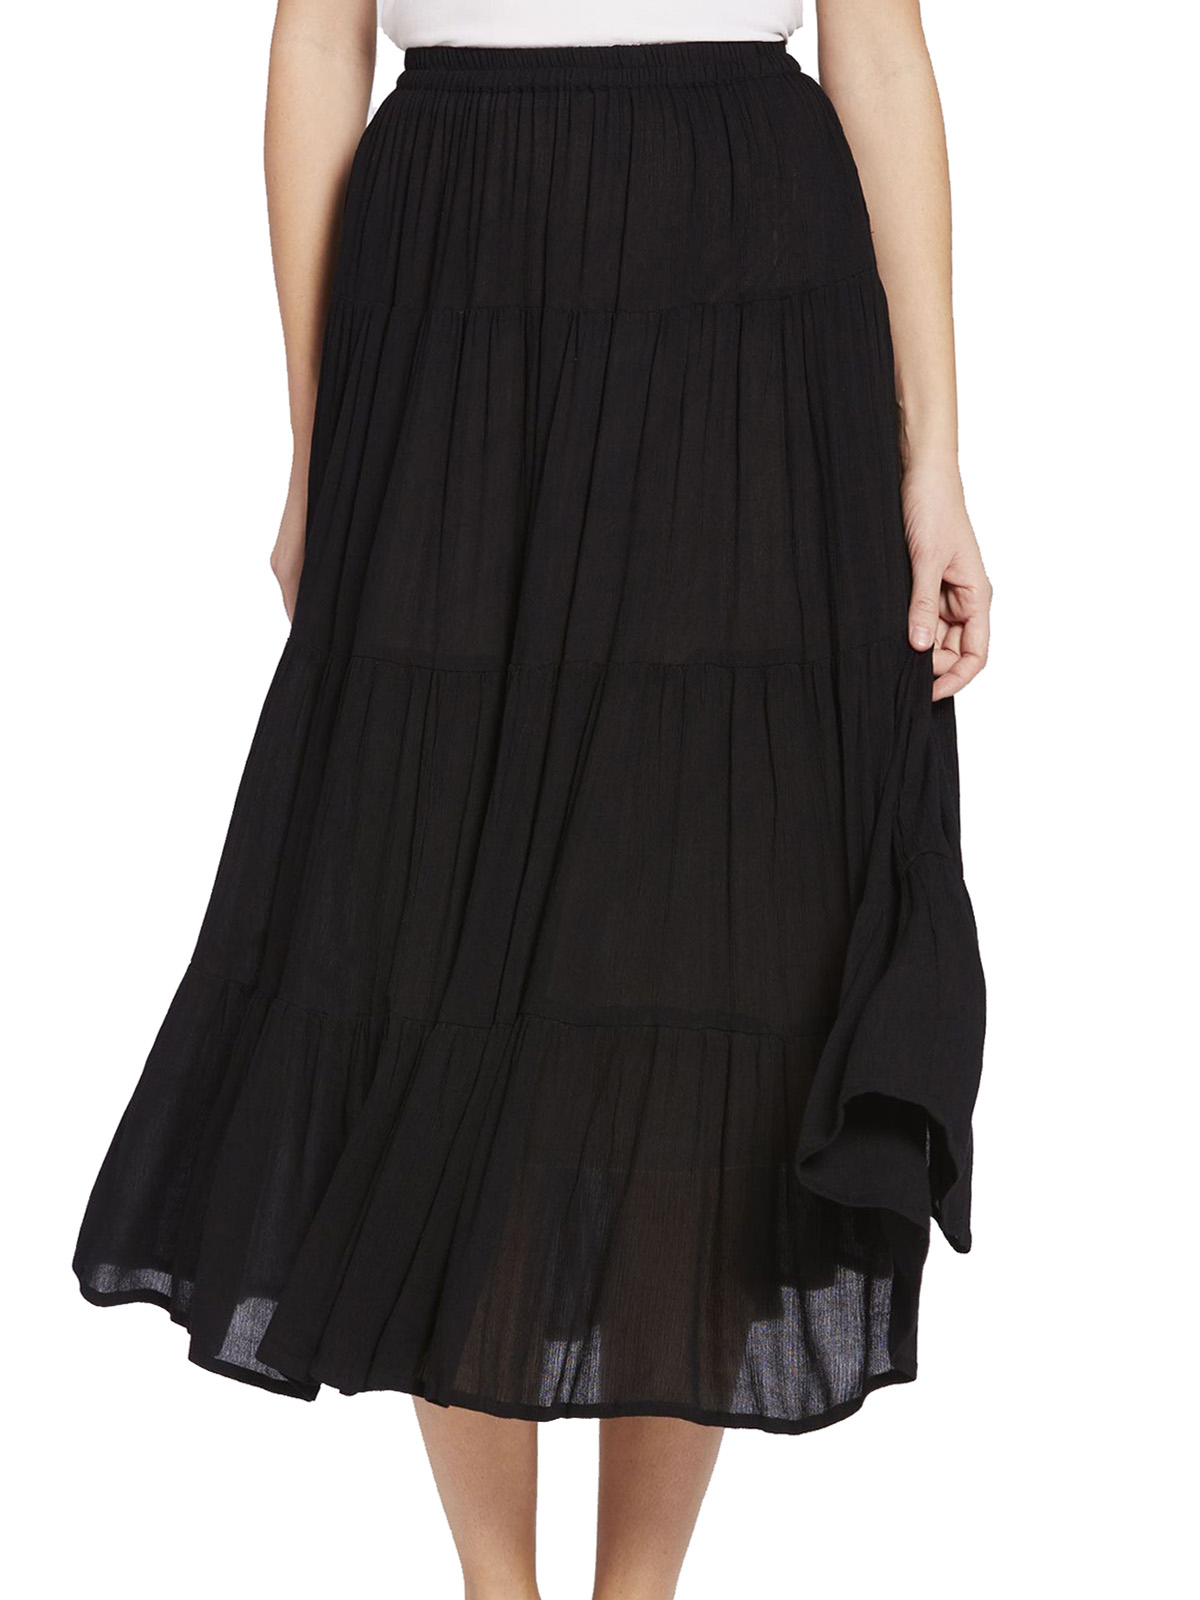 black dress skirt plus size